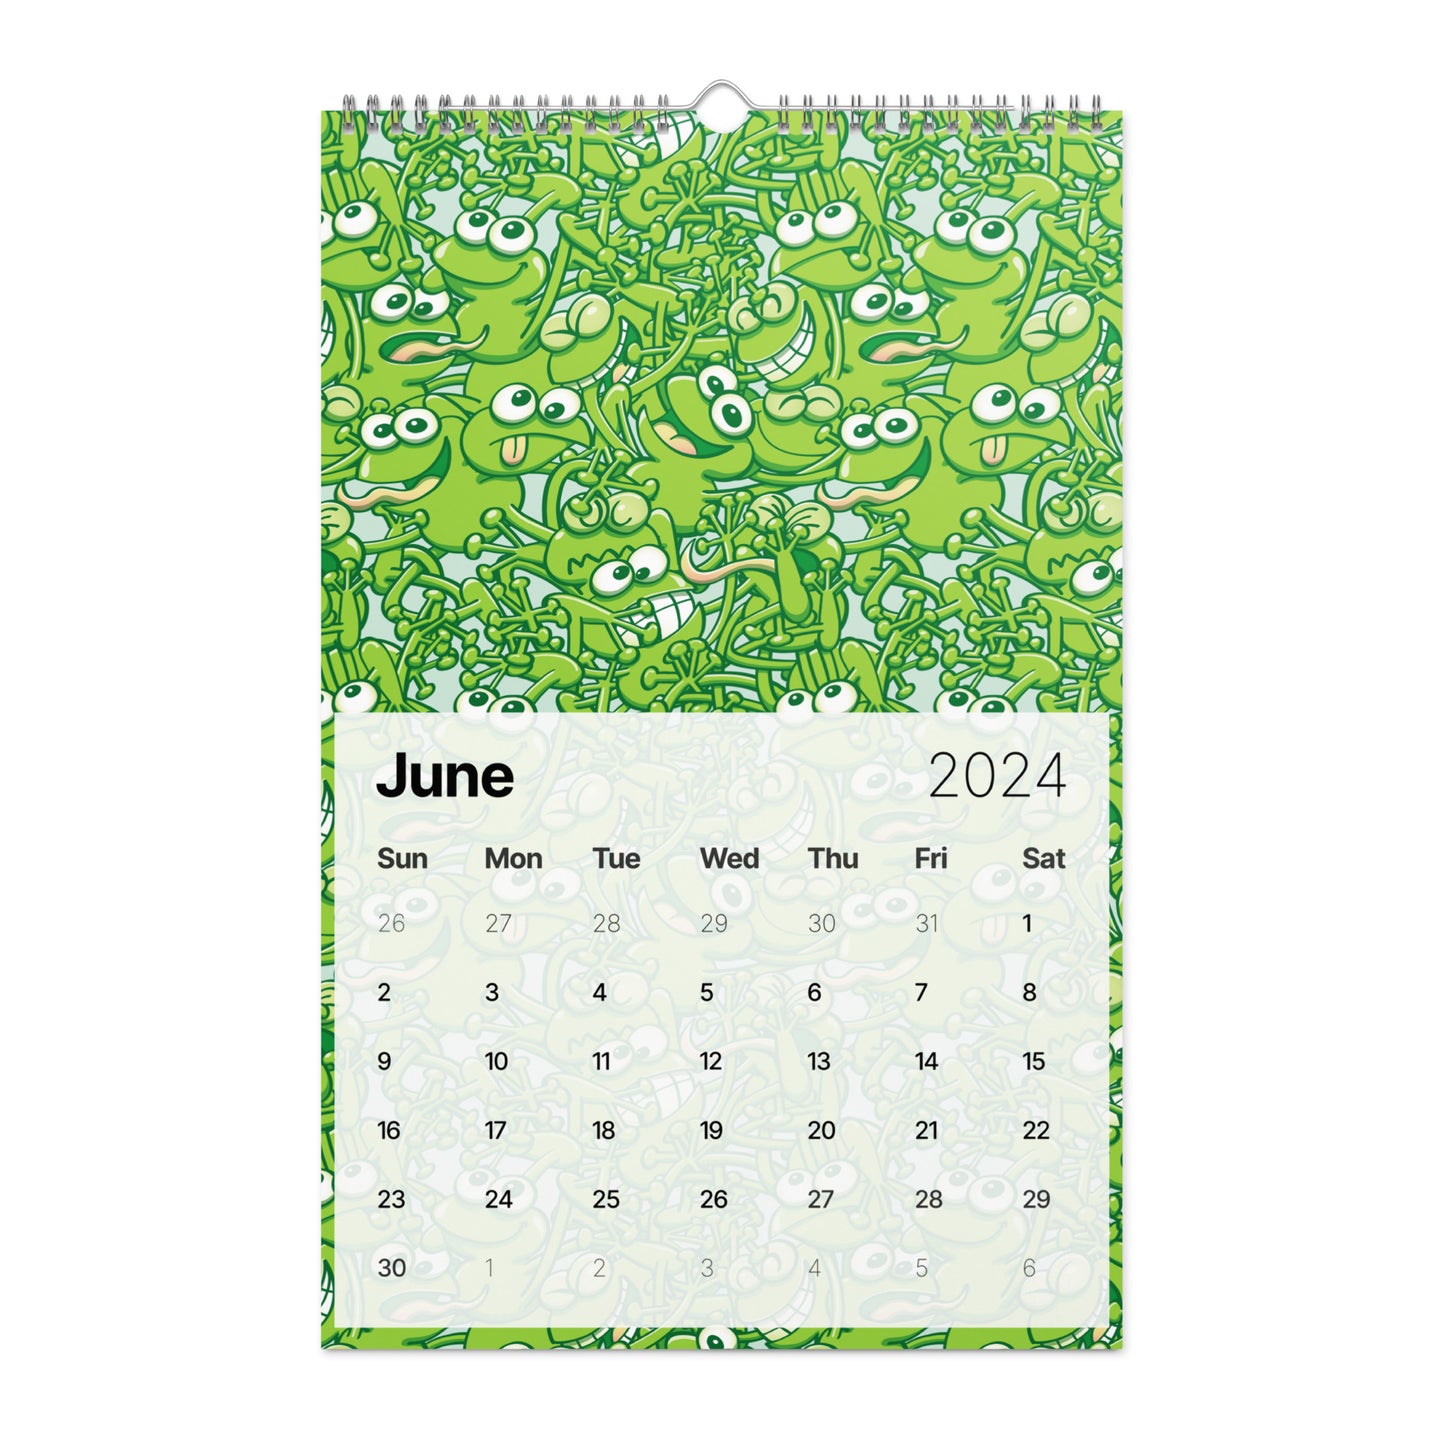 Zoo&co’s Doodle Art Wall calendar (2024). 11 x 17. June